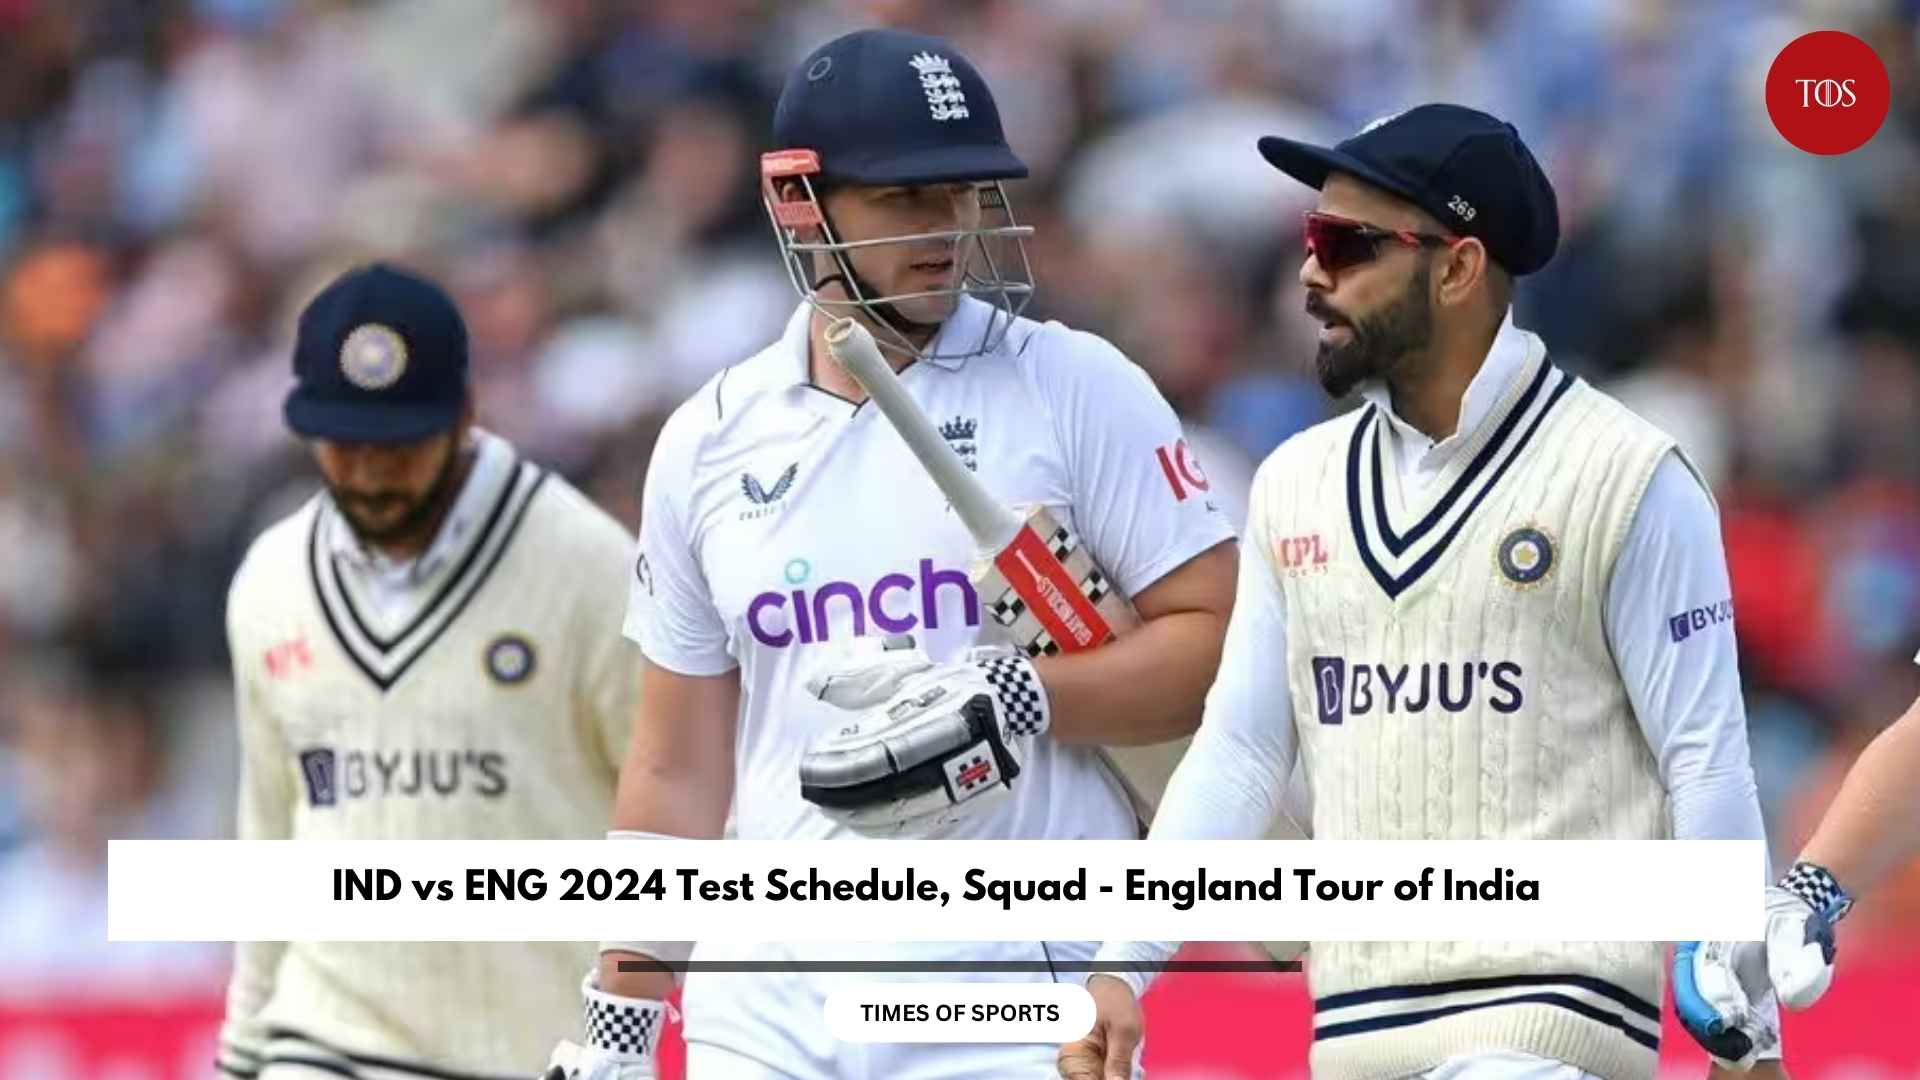 IND vs ENG 2024 Test Schedule